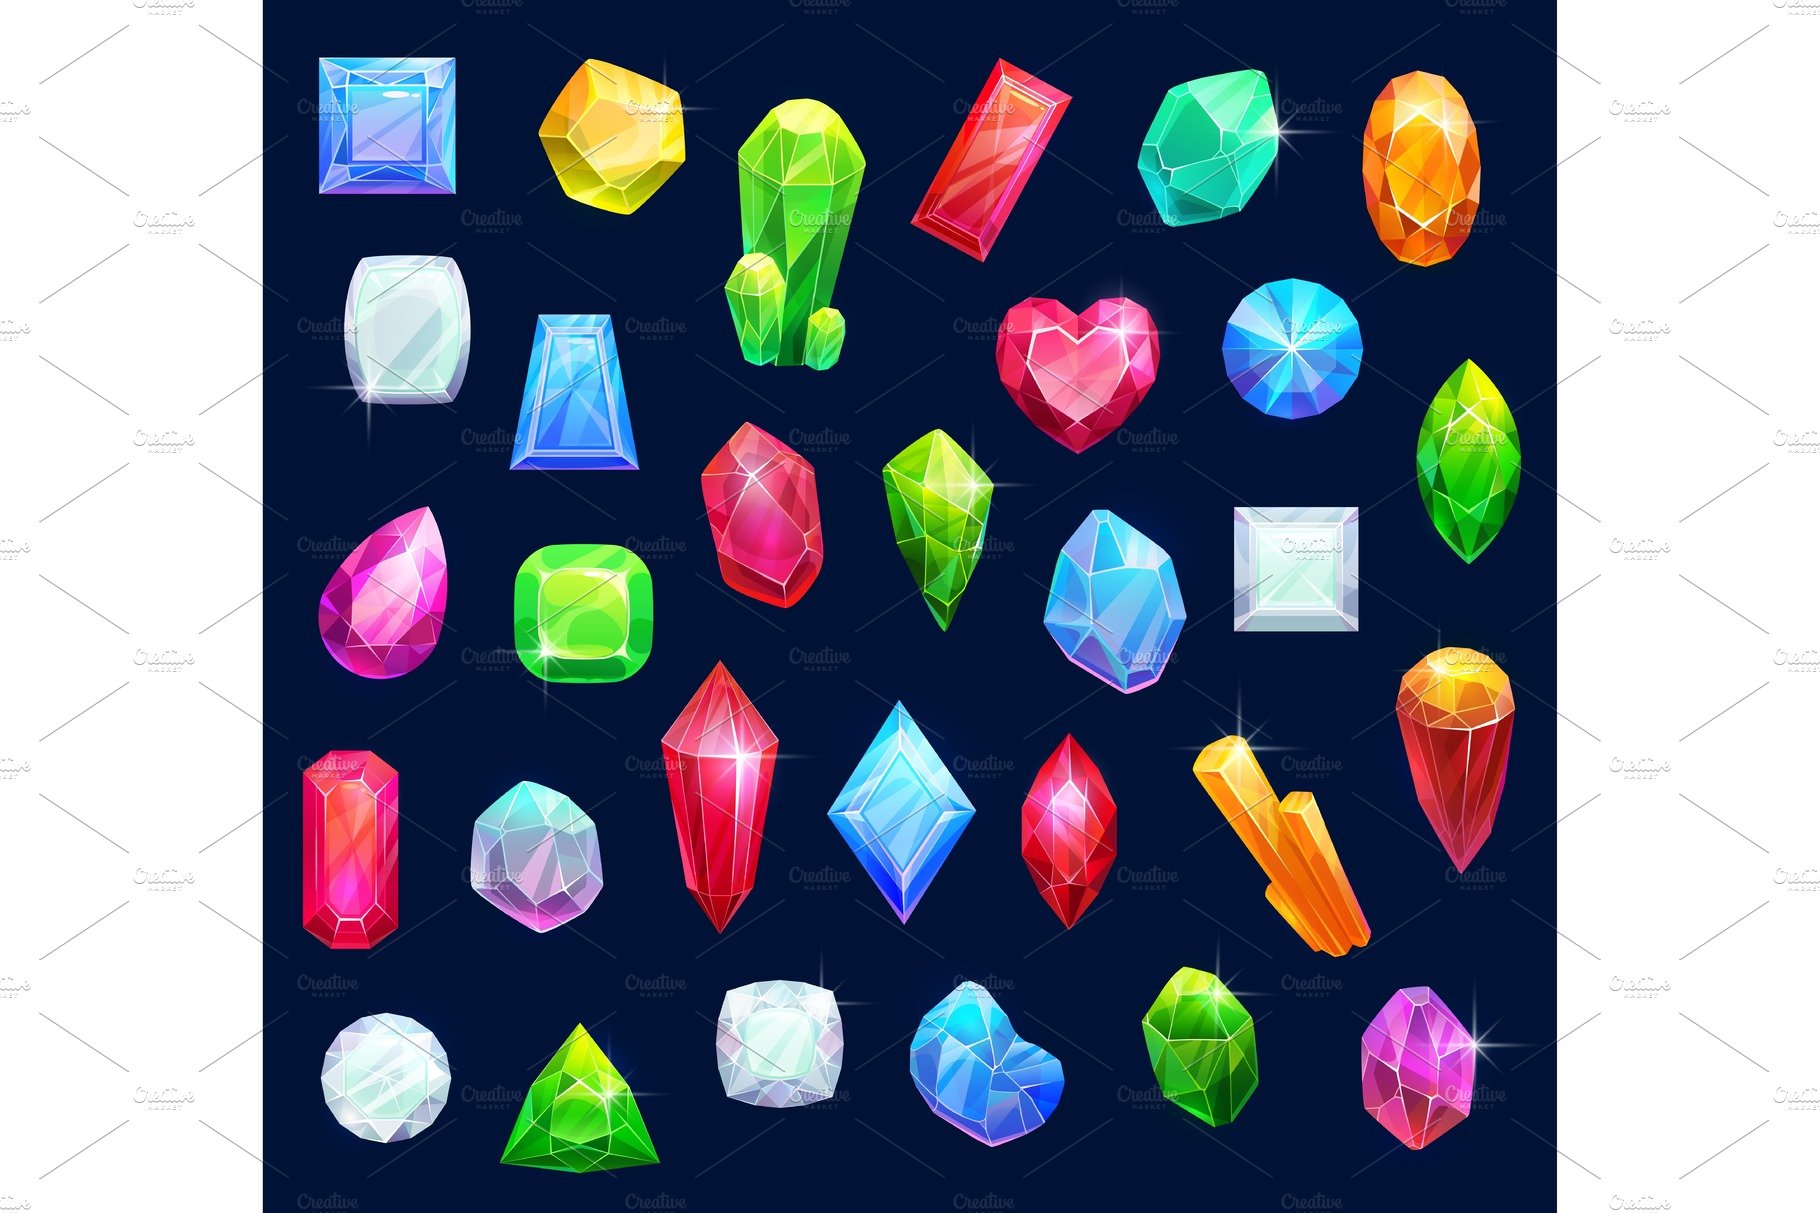 Jewelry gemstones, gems cover image.